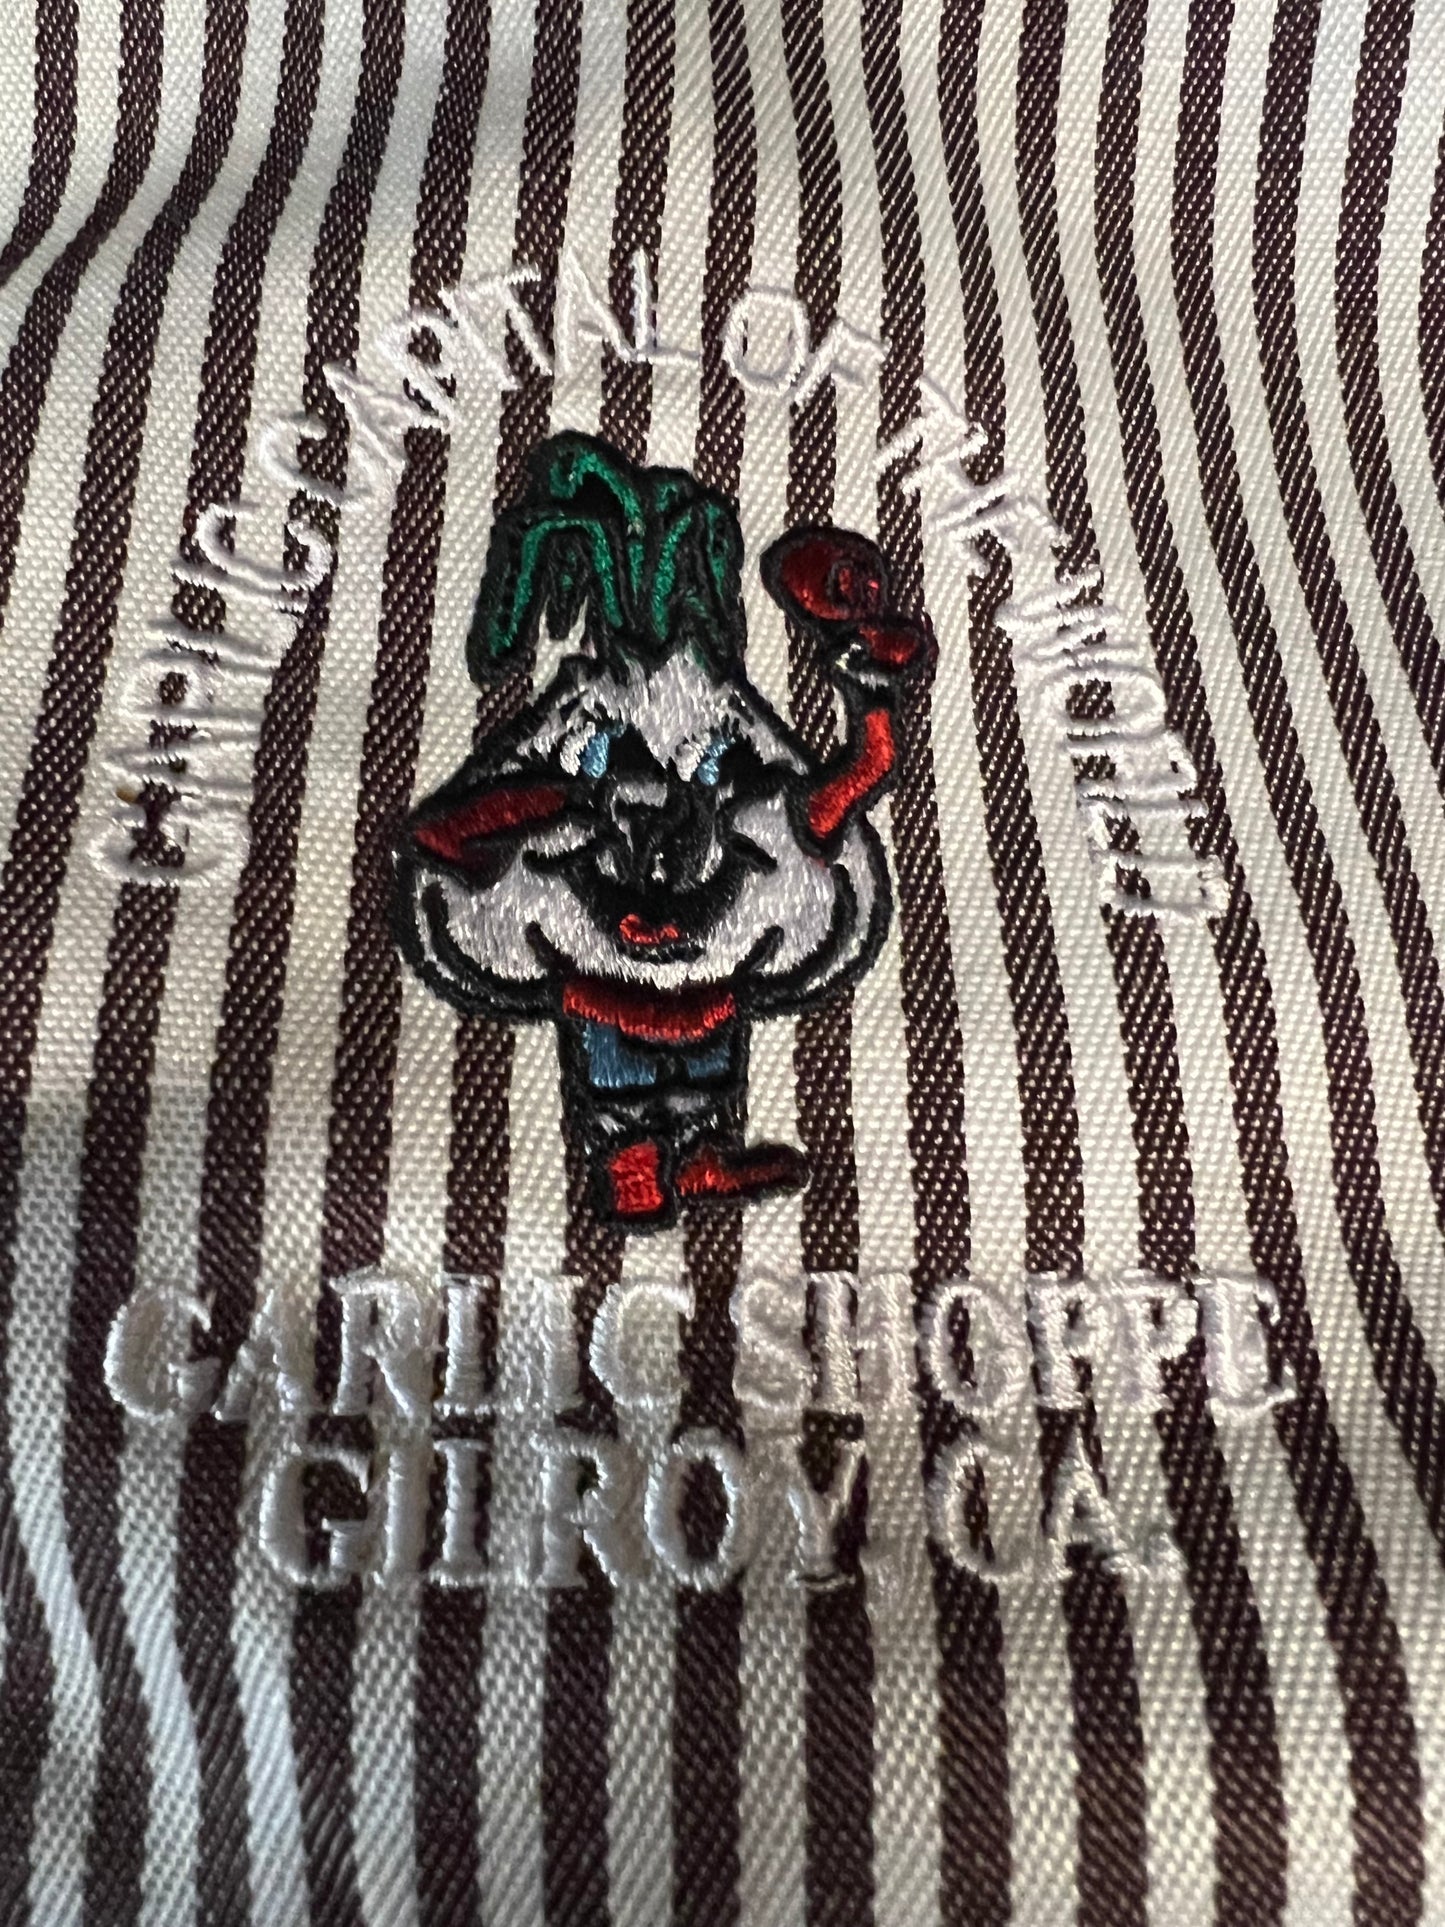 Aprons Garlic Capital of the World Garlic Dude Logo Garlic Shoppe Gilroy CA Embroidered $24.98